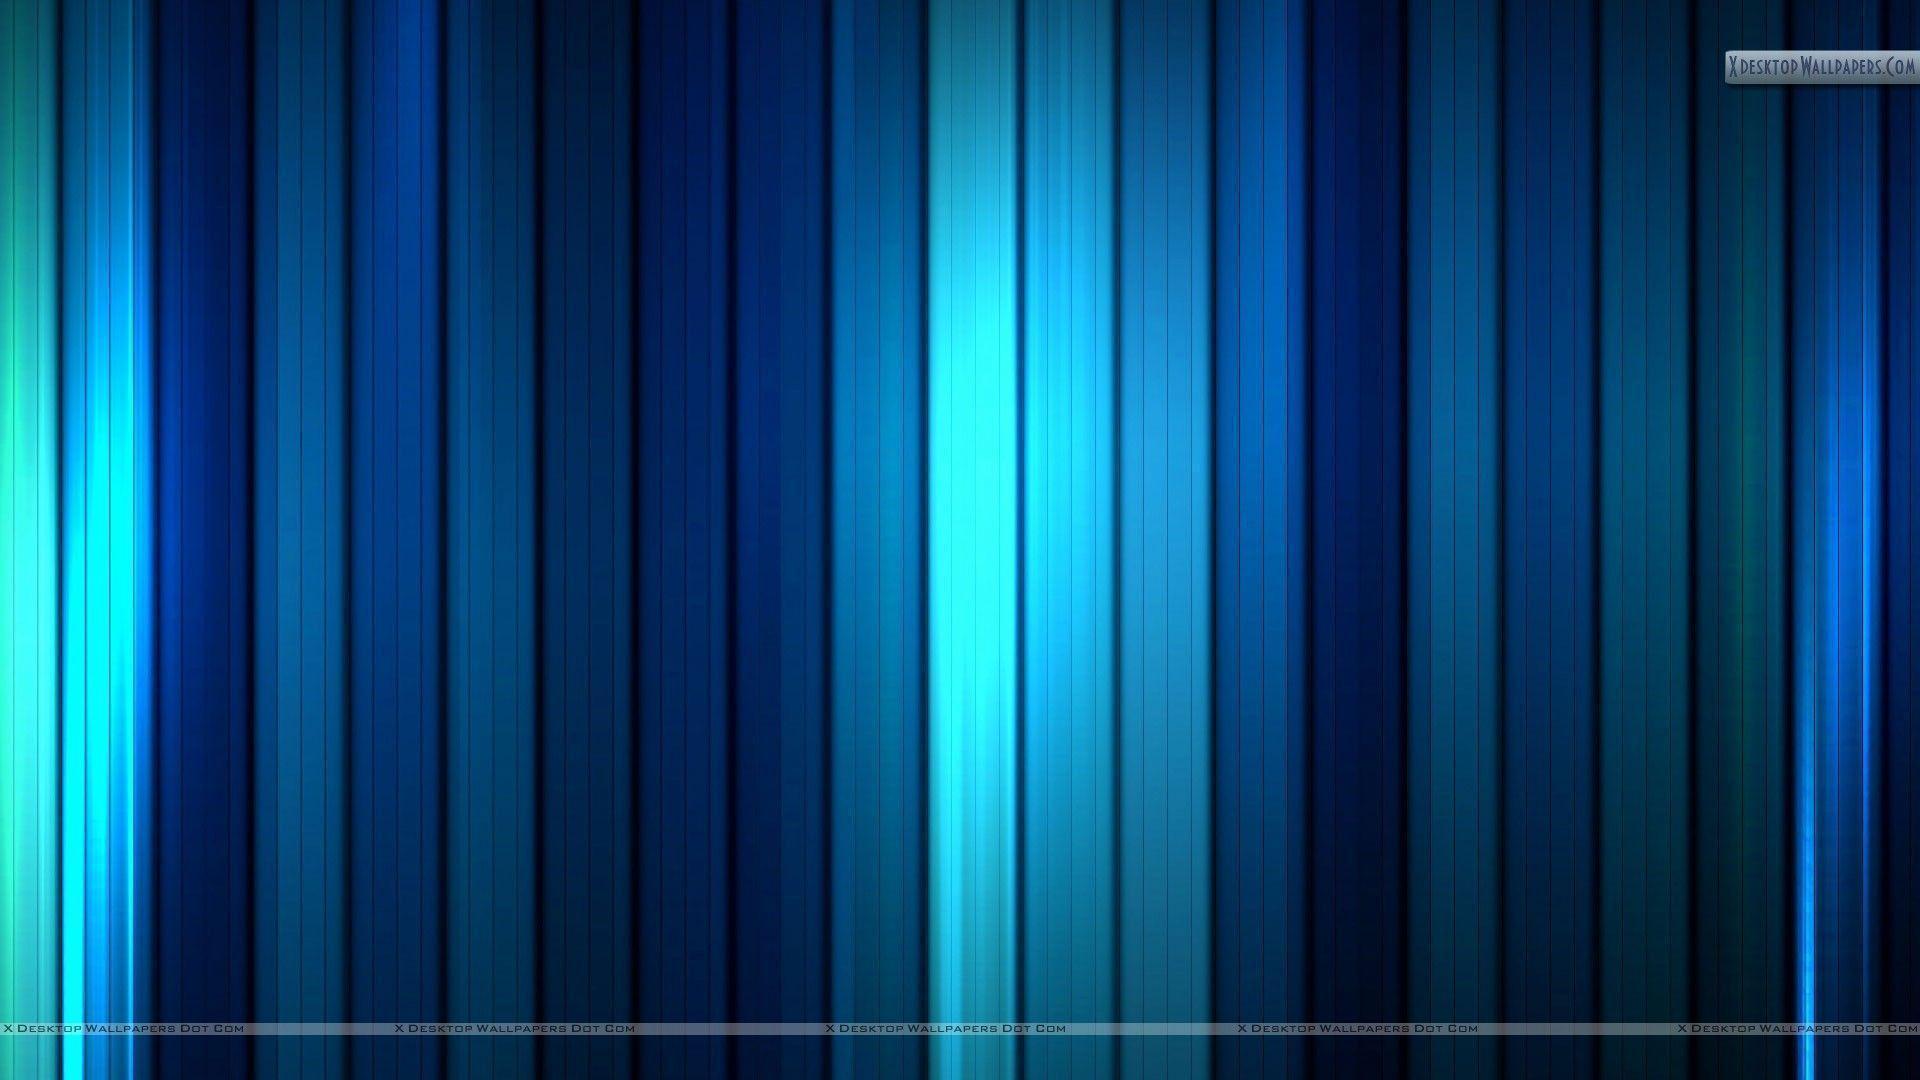 Cool Blue Background Wallpaper (5616) ilikewalls